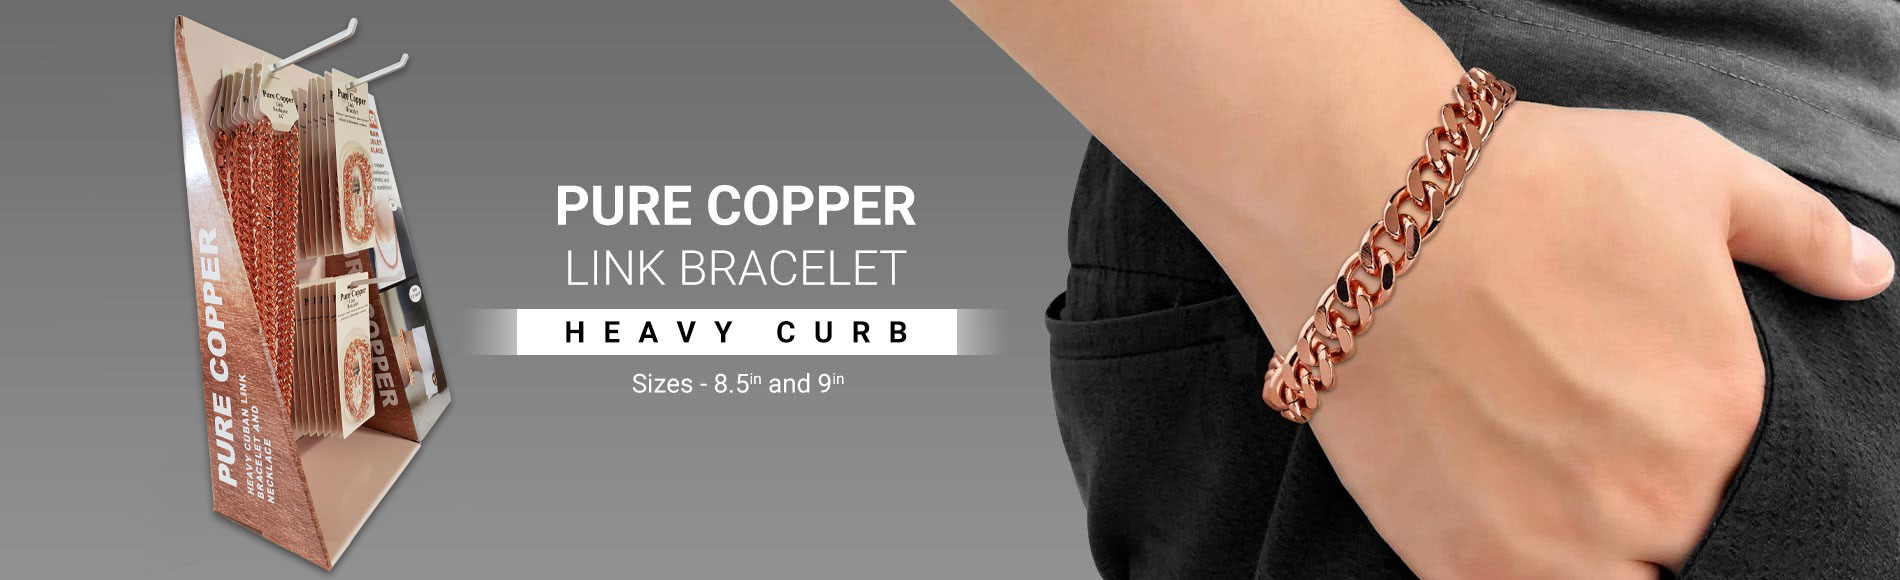 Pure Copper Link Bracelet